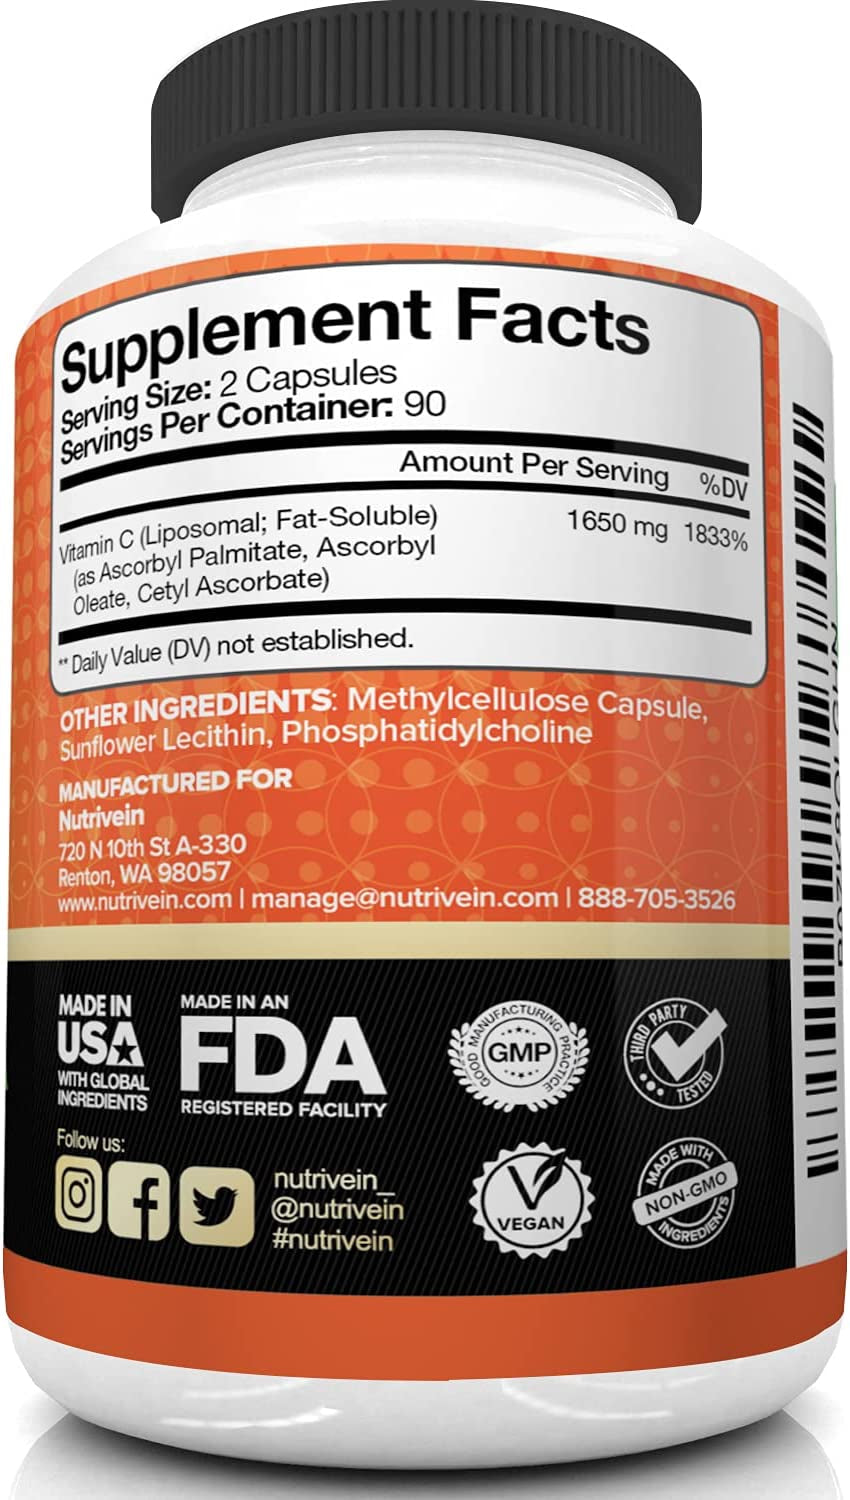 Nutrivein Liposomal Vitamin C 1650Mg - 180 Capsules - High Absorption Ascorbic Acid - Supports Immune System & Collagen Booster - Powerful Antioxidant